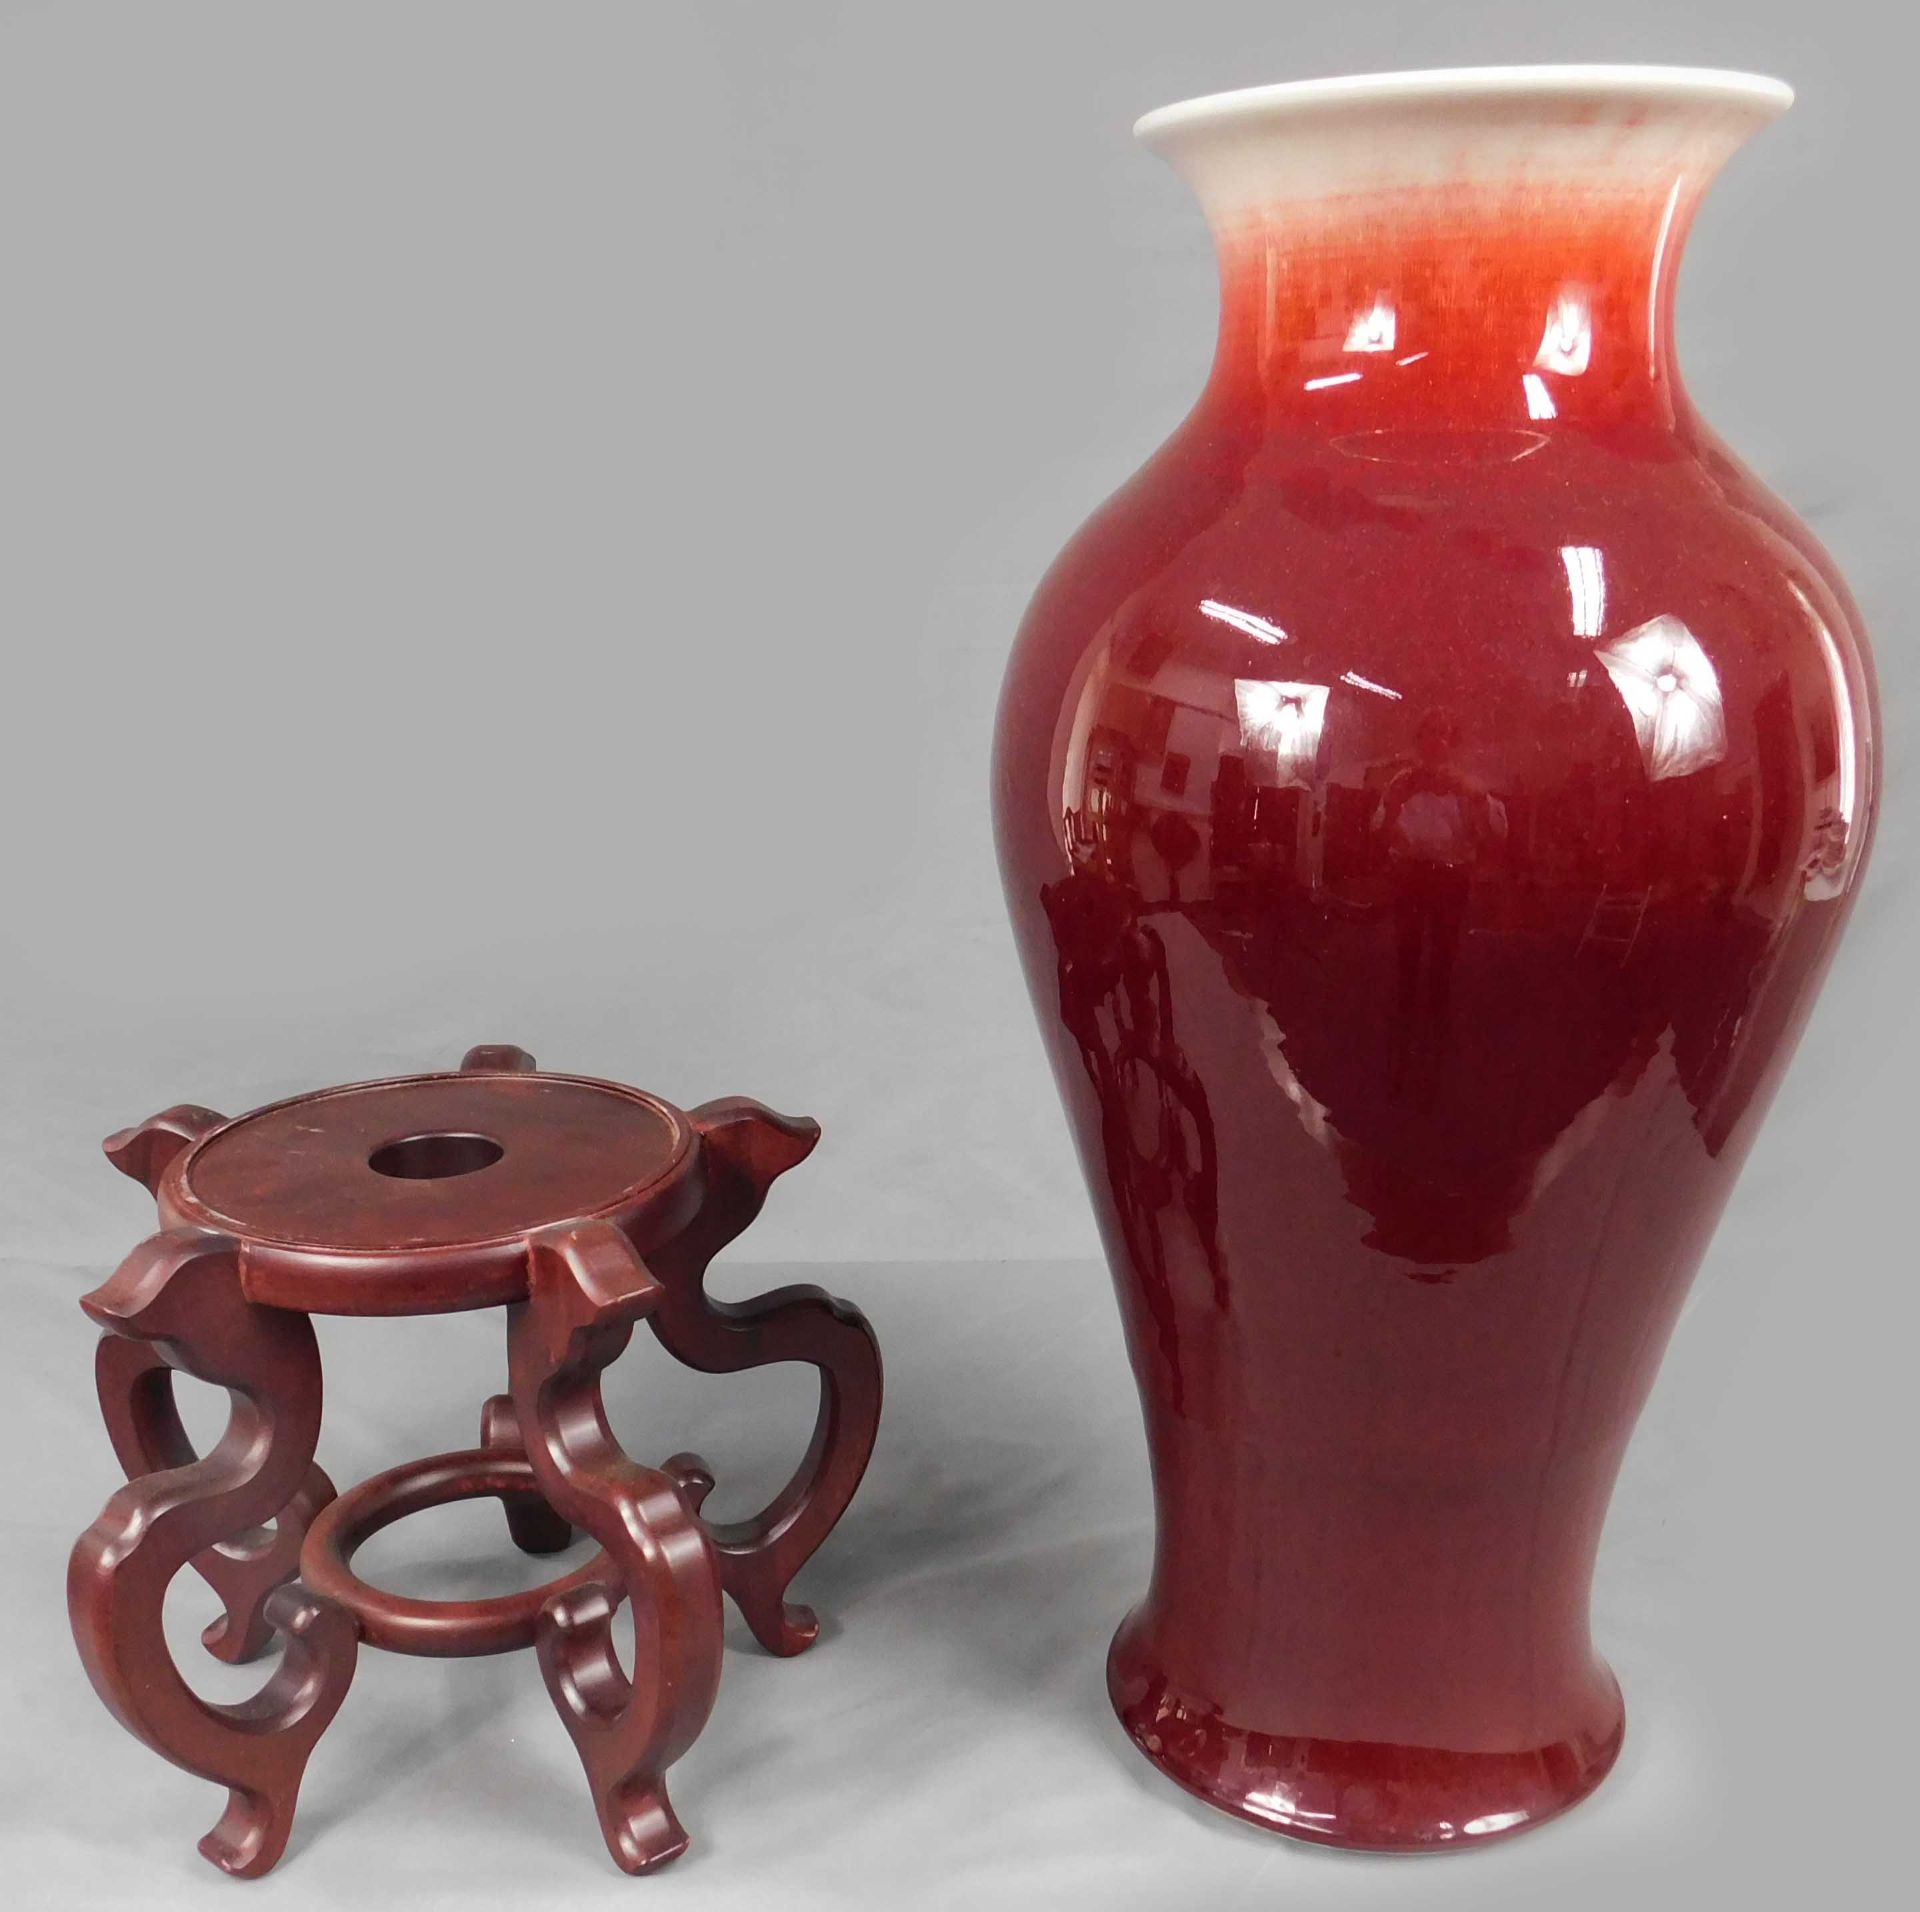 Schlanke Ochsenblut Vase auf Holzstand. Wohl China alt. - Image 2 of 9